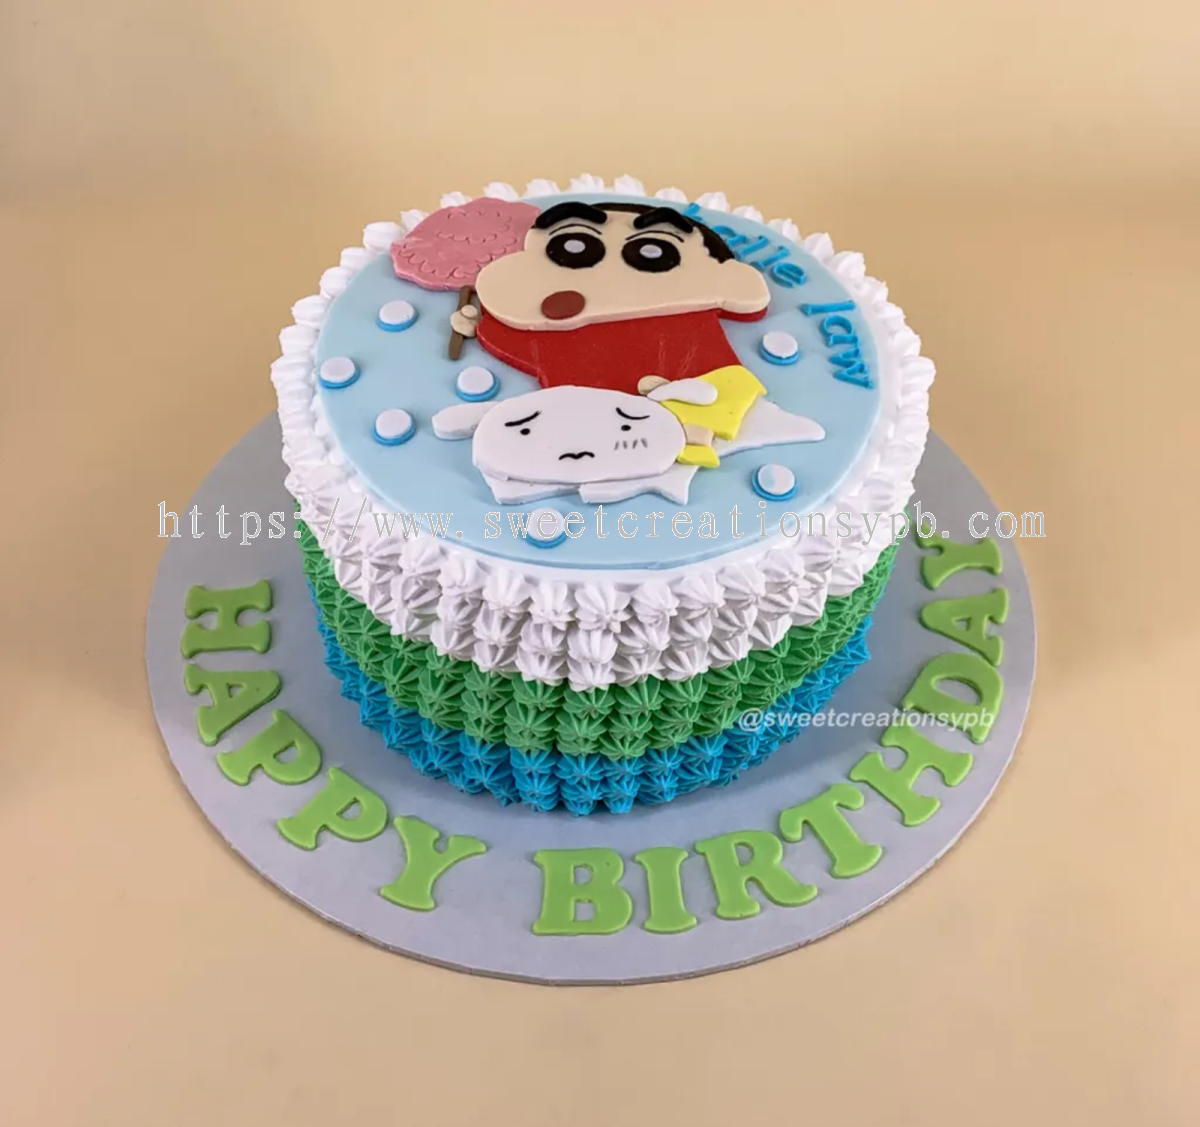 50 Shinchan Cake Design (Cake Idea) - October 2019 | Cool birthday cakes,  Animal birthday cakes, Pretty birthday cakes